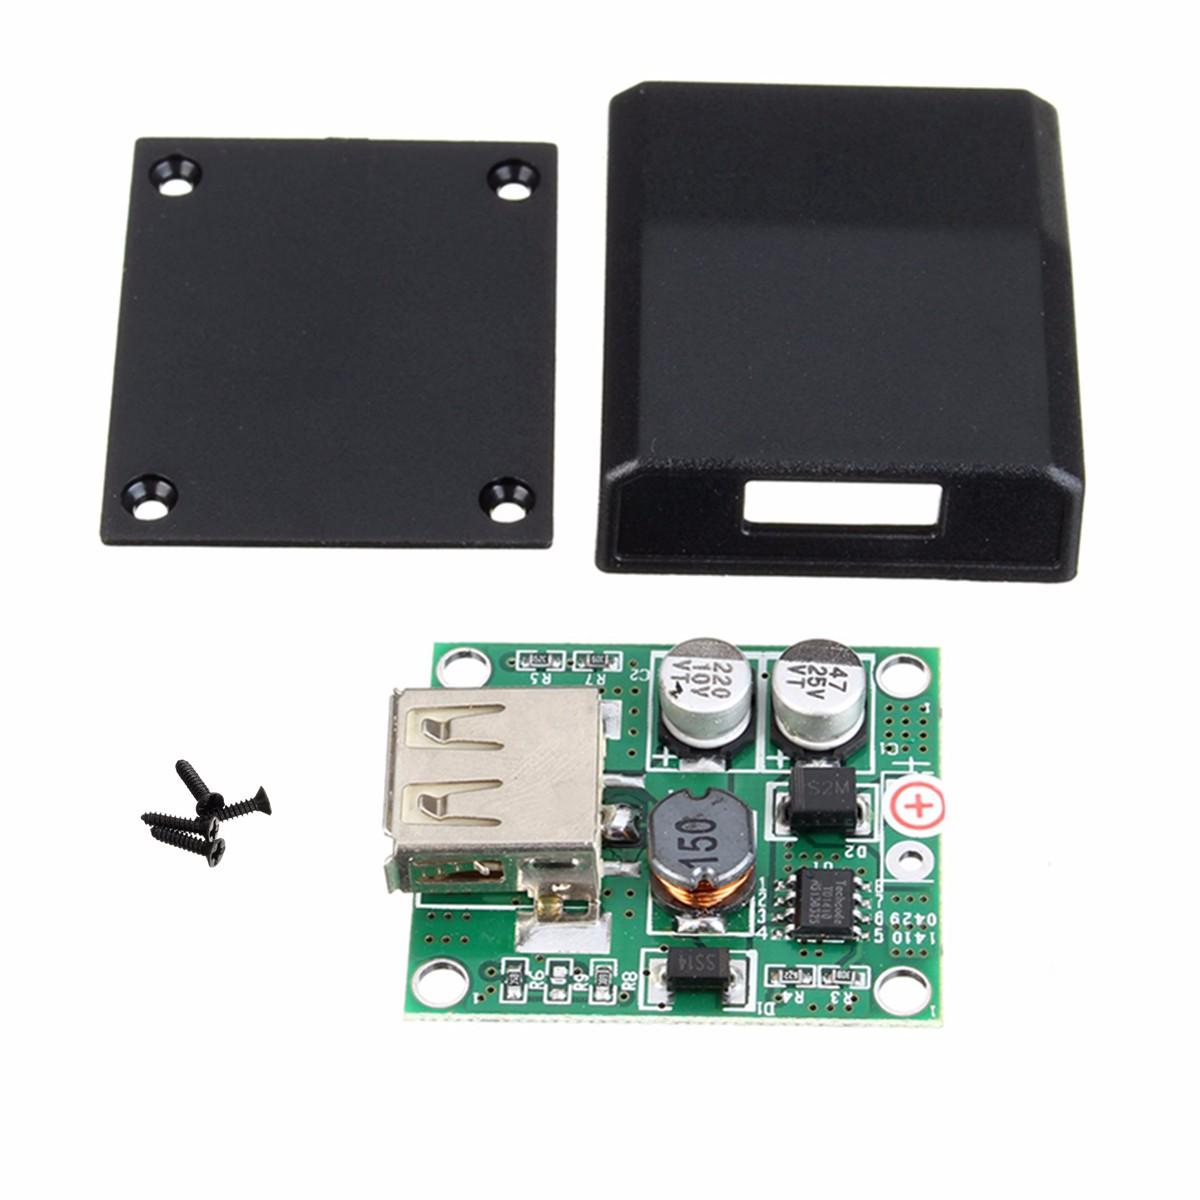 

DIY 5V 2A Voltage Regulator Junction Box Solar Panel Charger Special Kit For Electronic Production